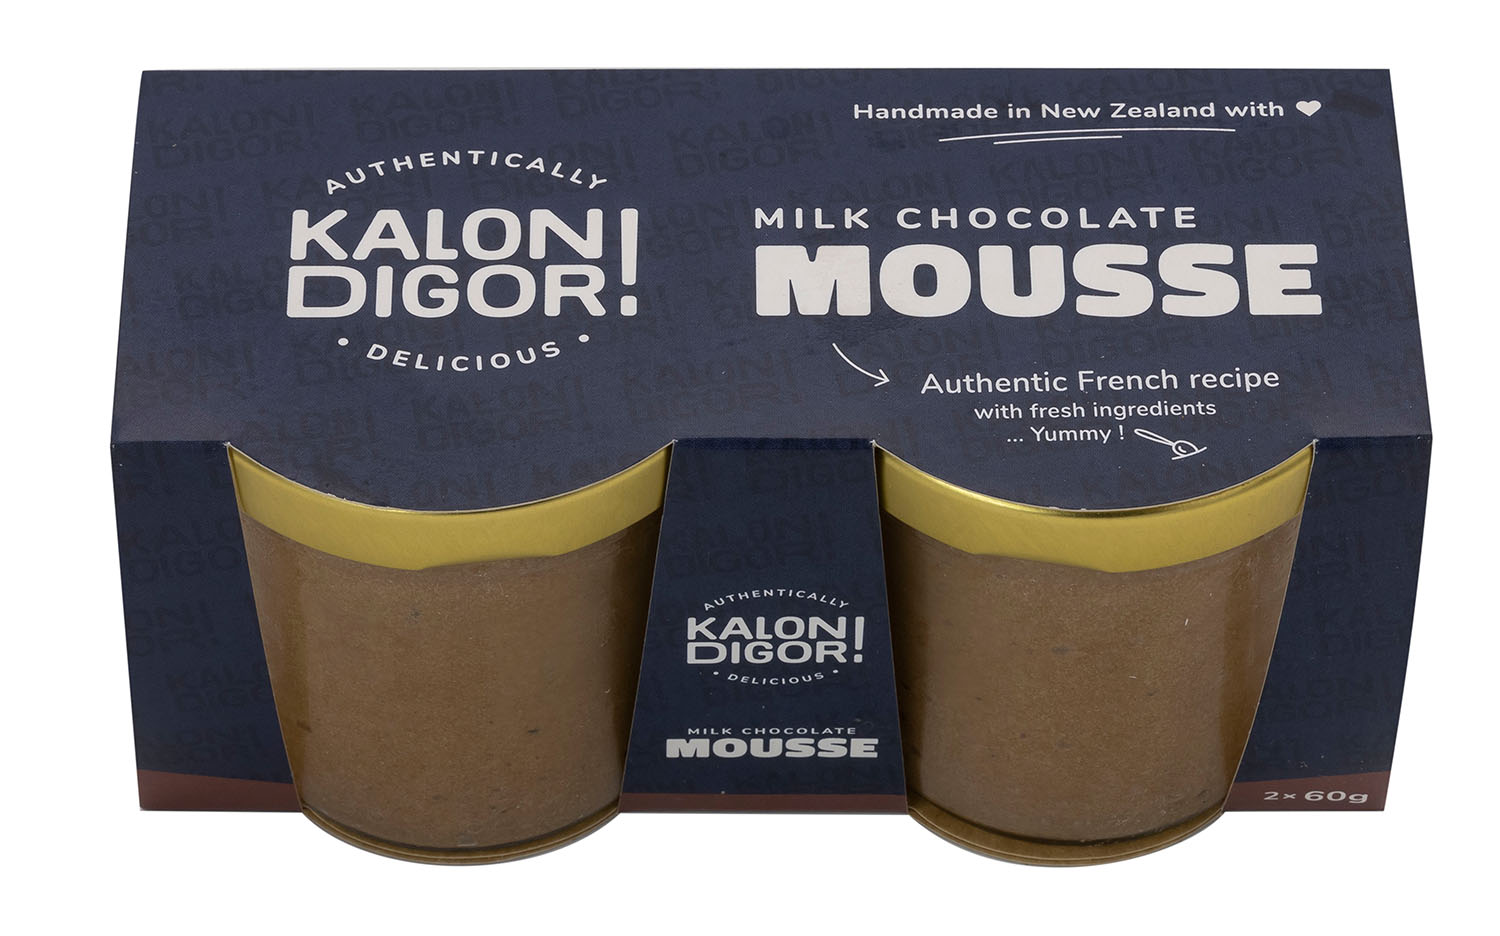 Kalon Digor milk chocolate mousse